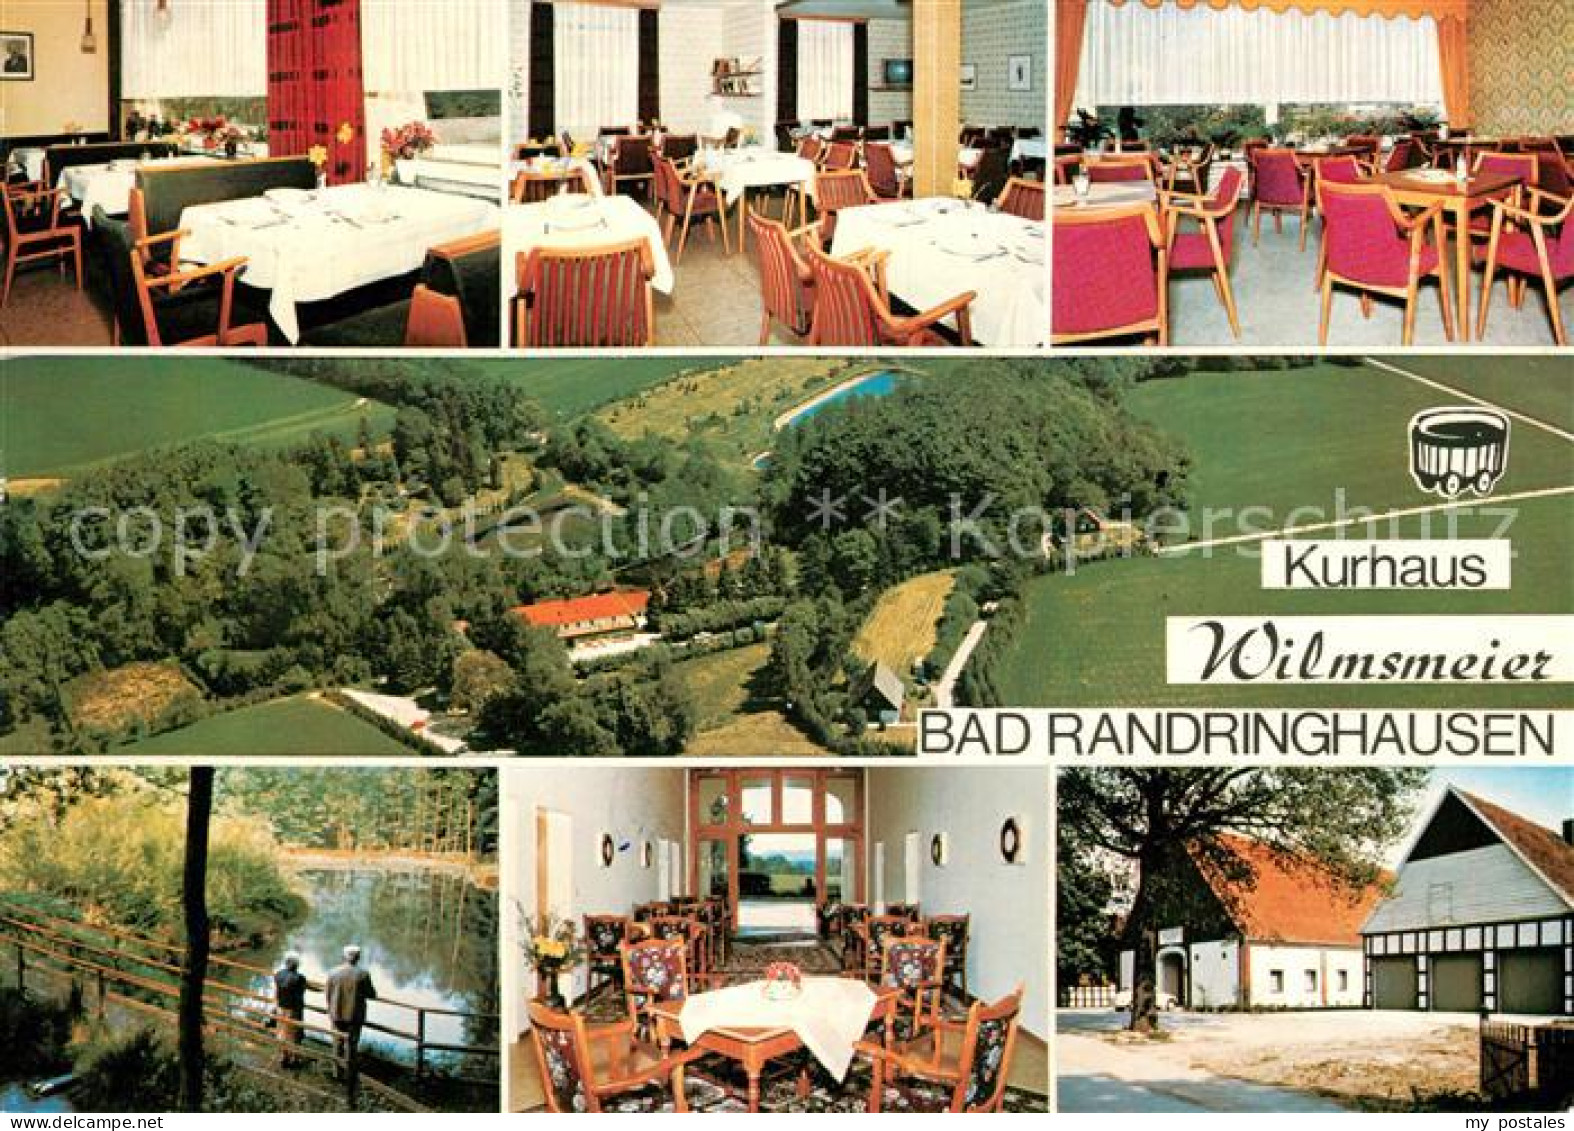 73171835 Bad Randringhausen Kurhaus Wilmsmeier Bad Randringhausen - Buende